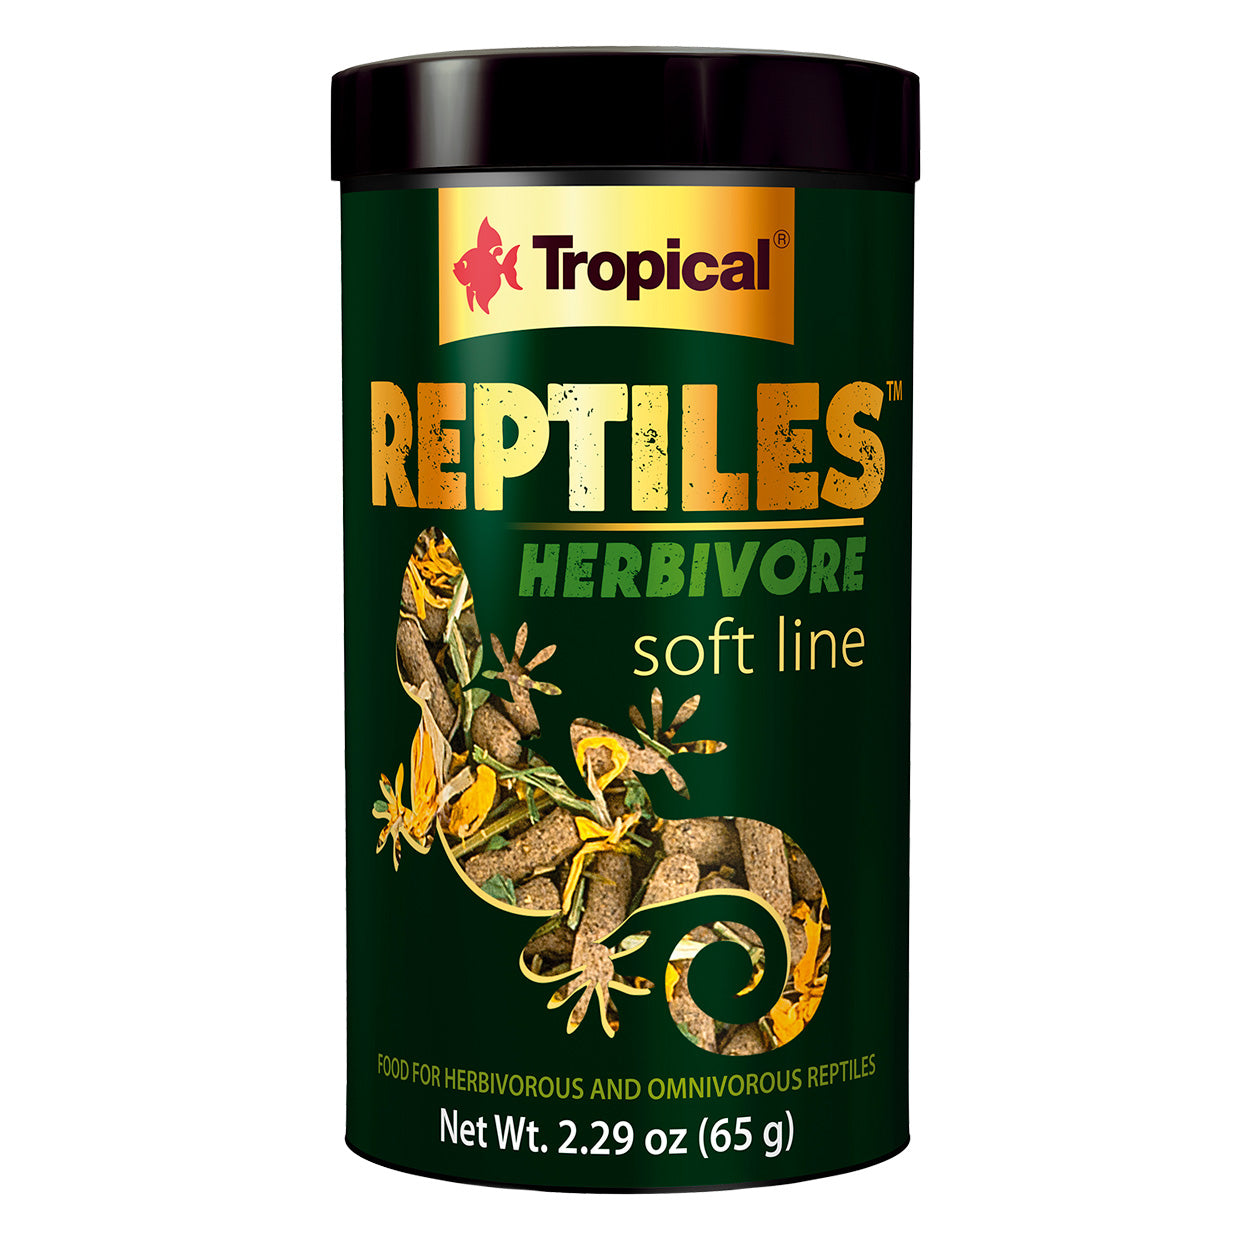 Tropical Reptiles Herbivore Soft Line